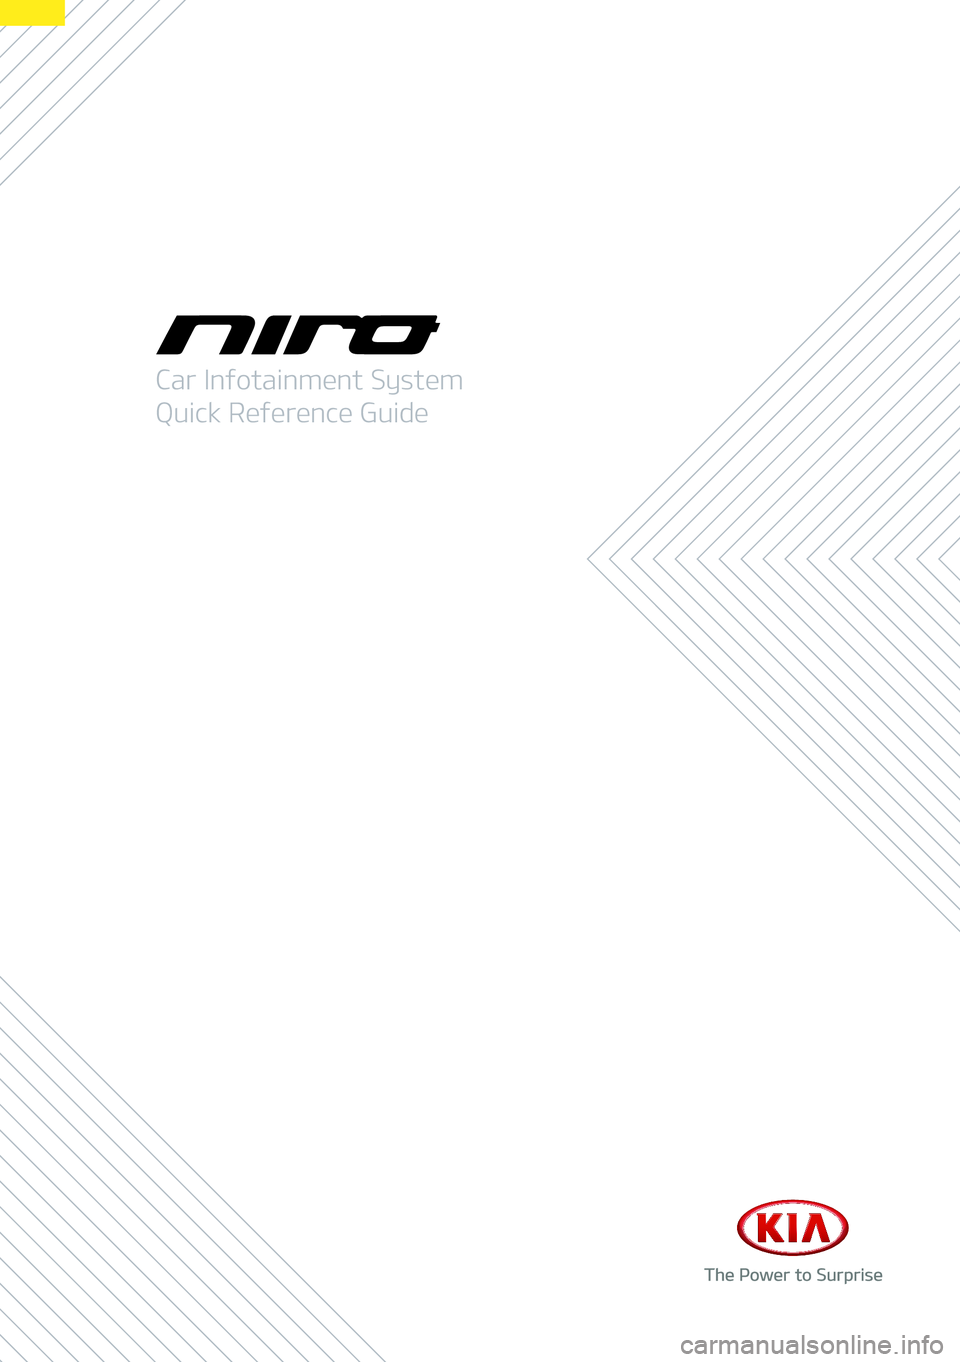 KIA NIRO 2021  Navigation System Quick Reference Guide Car Infotainment System
Quick Reference Guide               